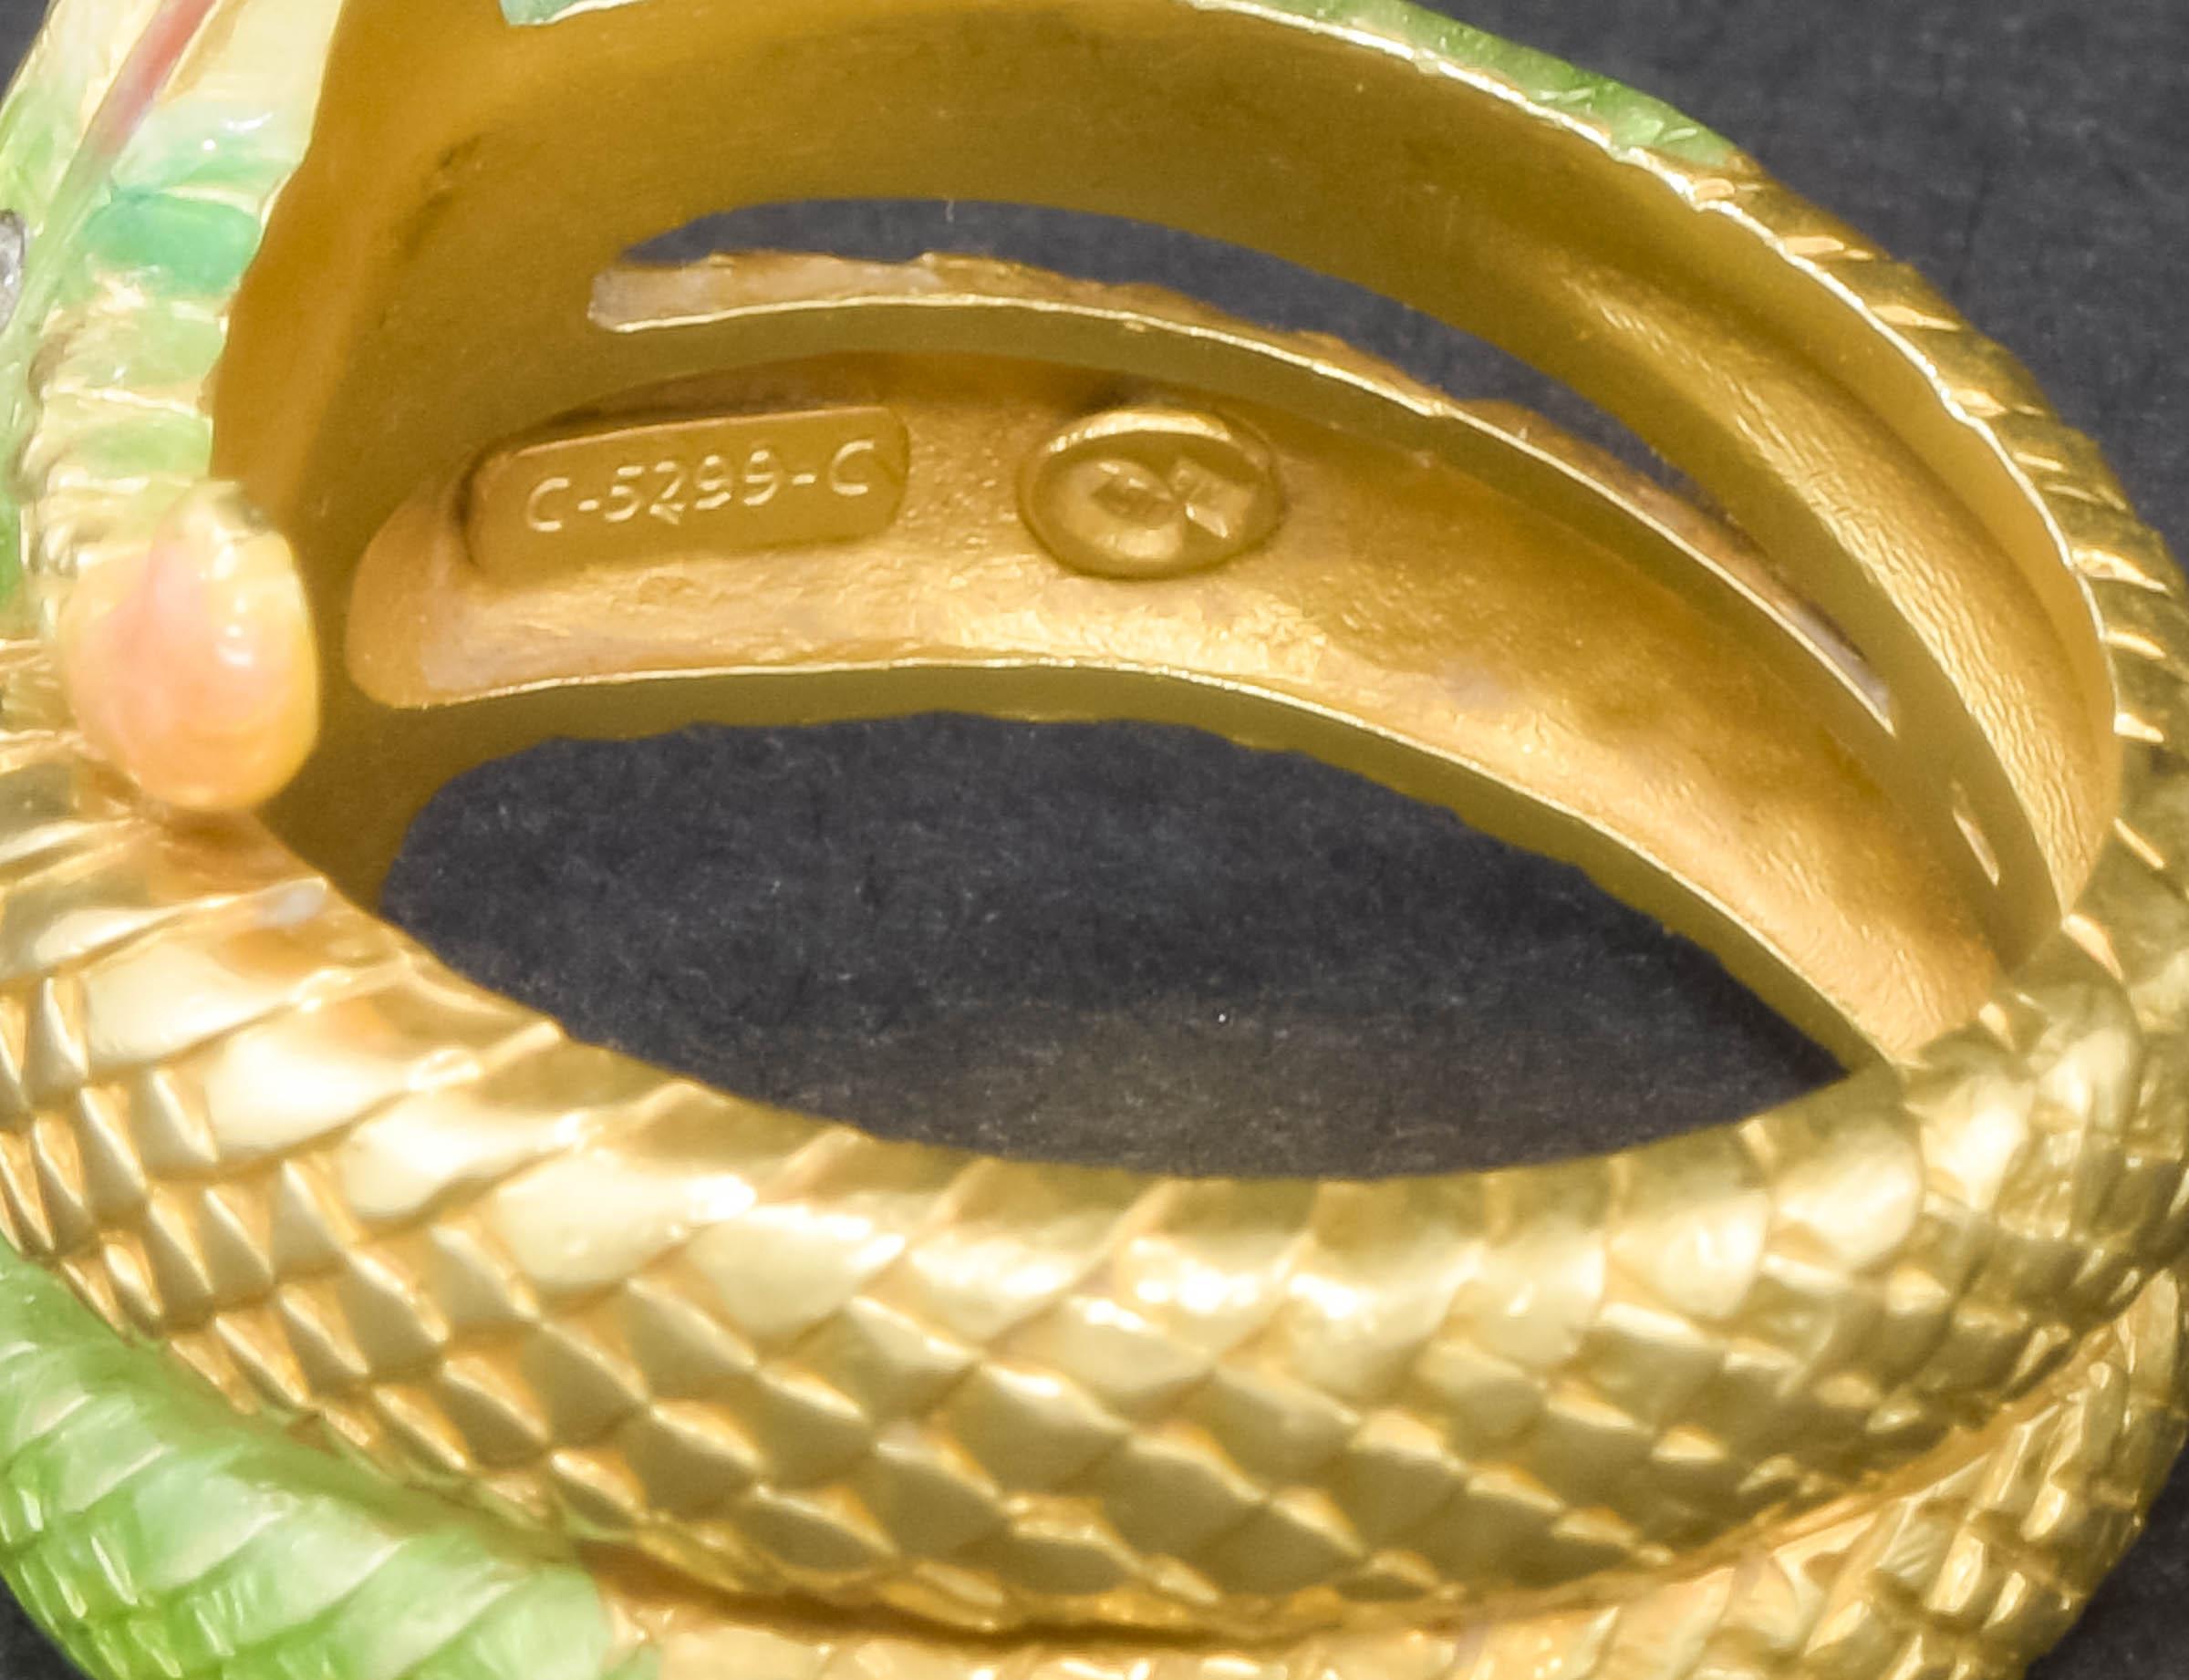 Enamel 18K Gold Diamond Snake Ring by Masriera, Original Boxes & Certificate 9